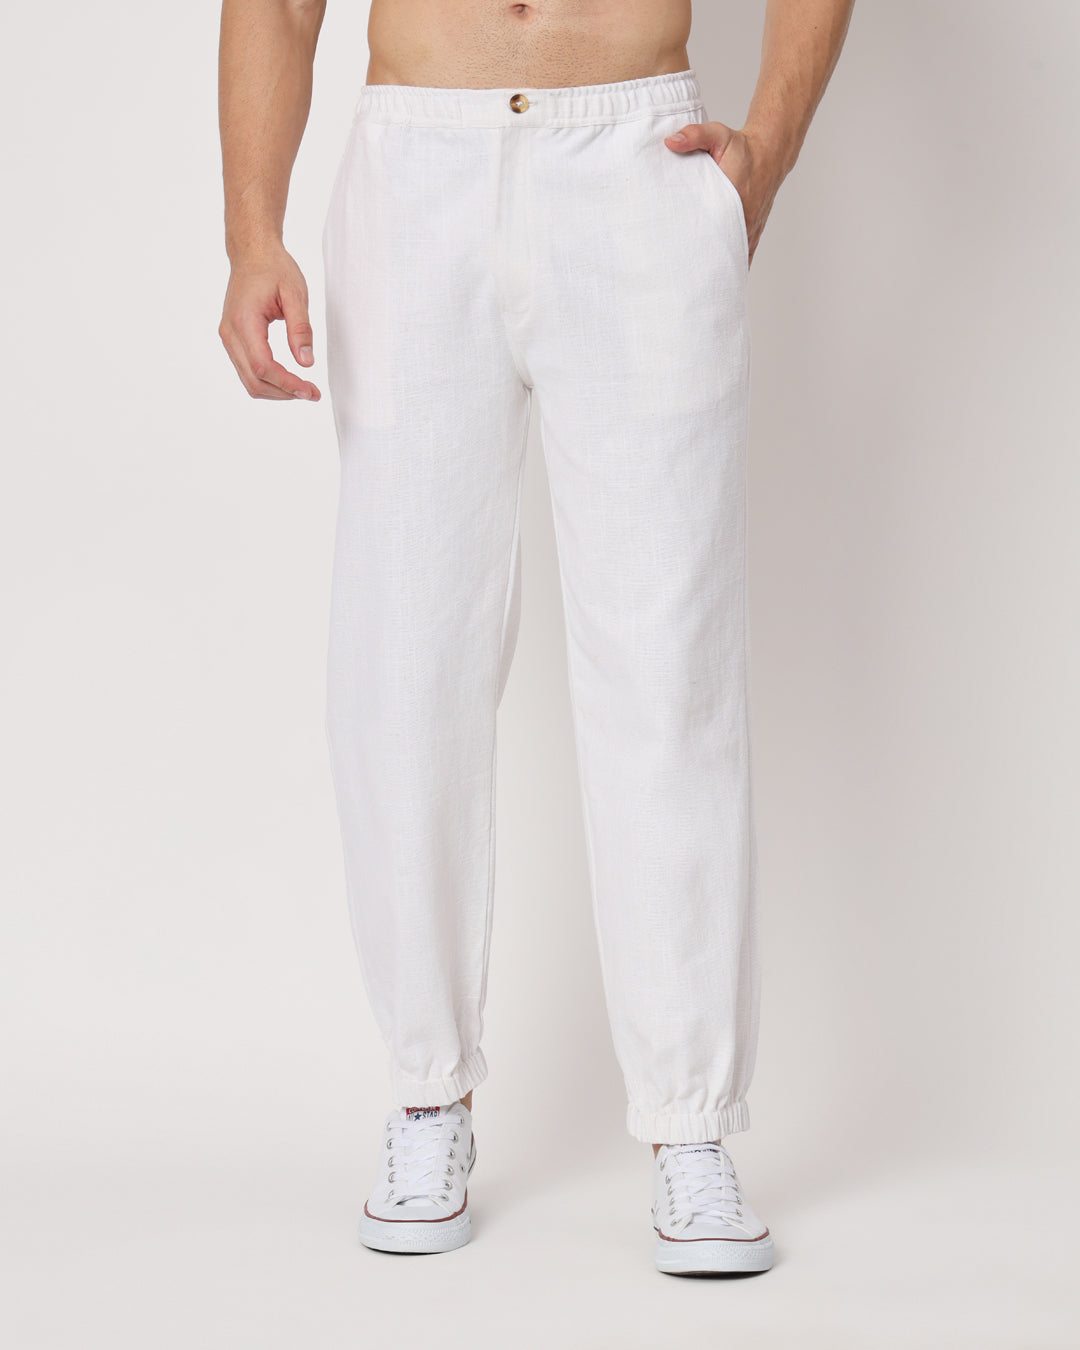 Combo: White & Grey Jog Men's Pants - Set of 2